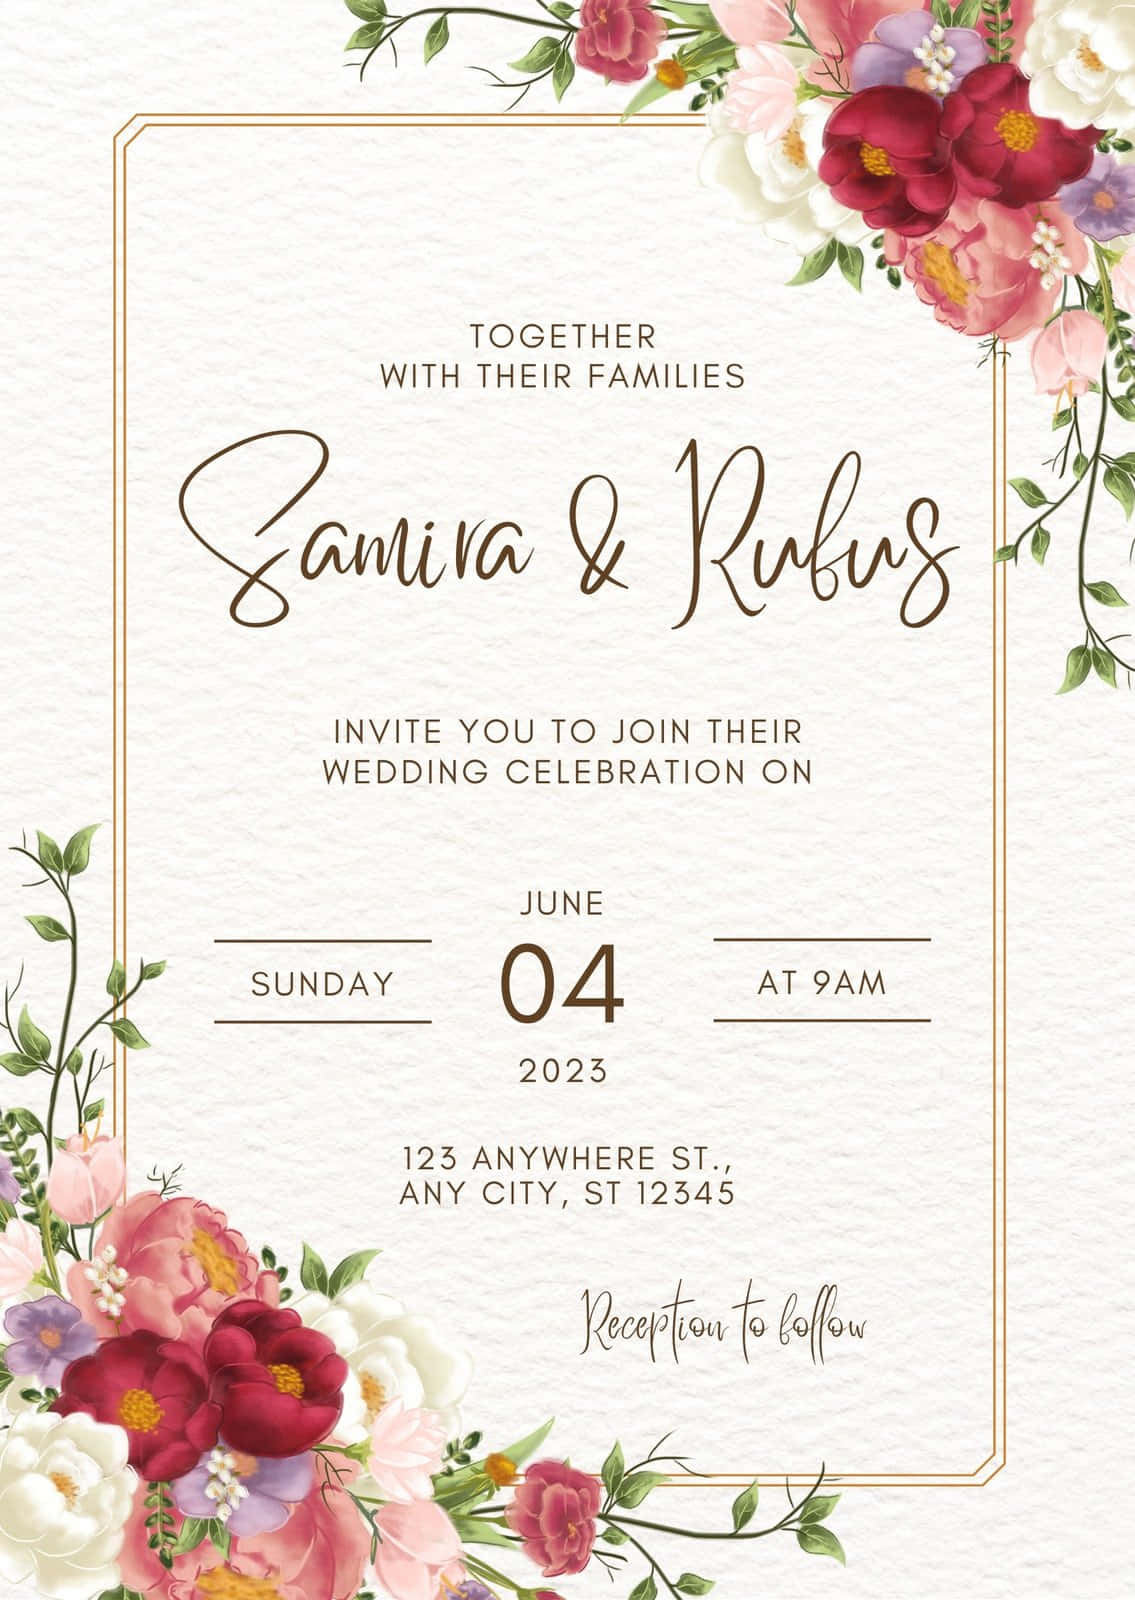 Colorful Flower Borders Wedding Invitation Background